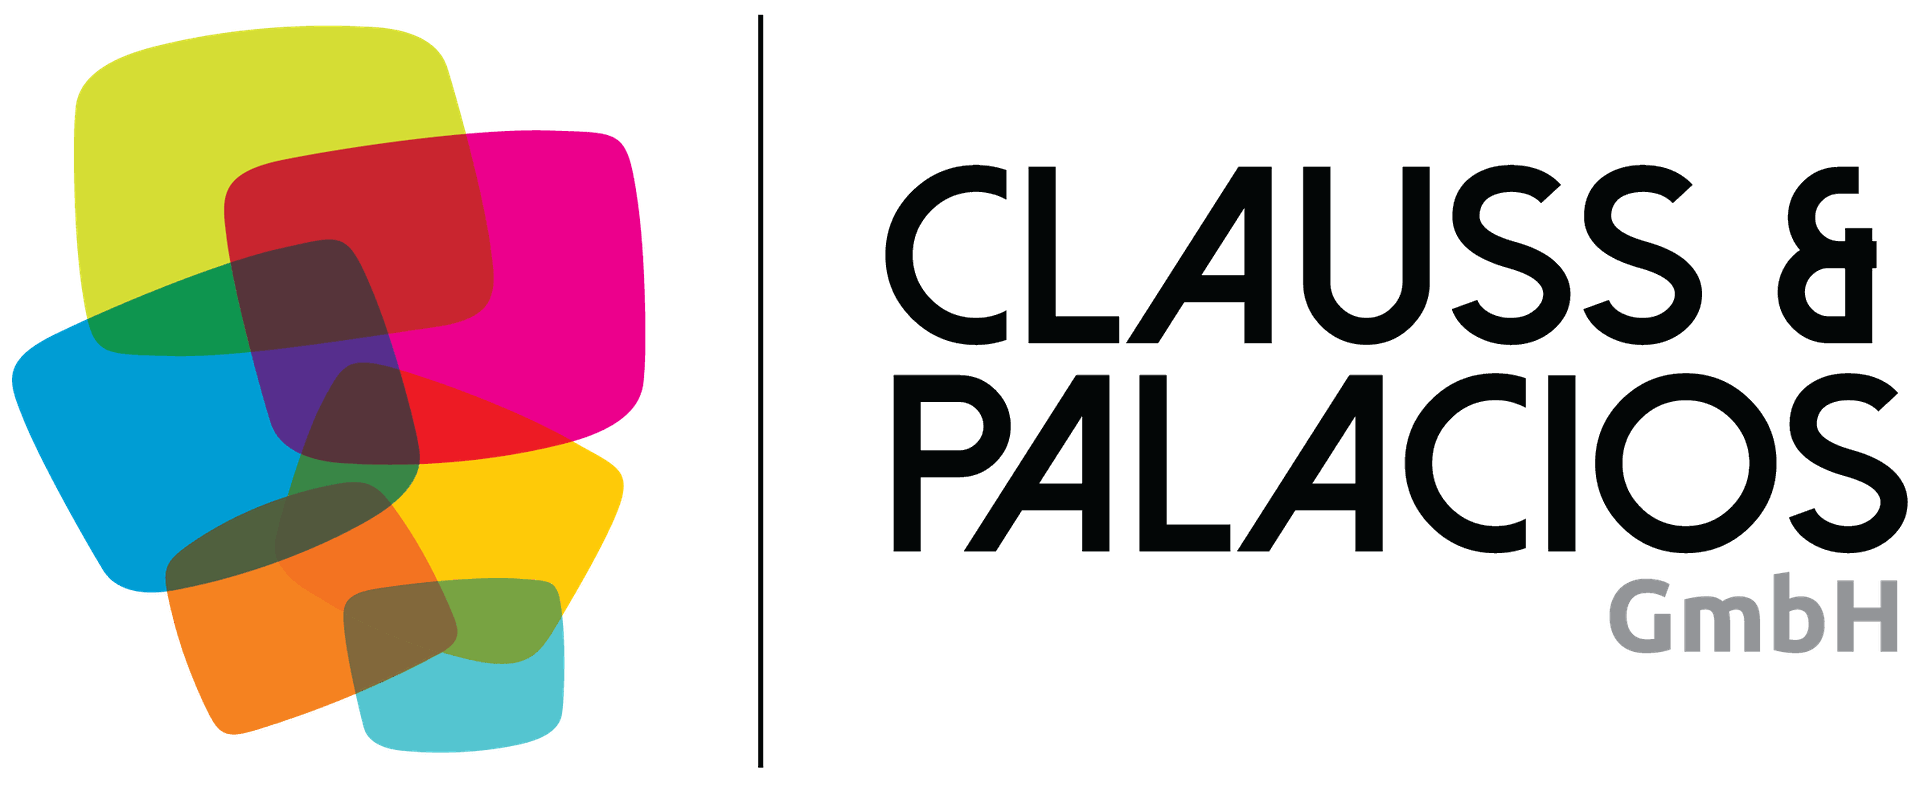 Clauss & Palacios GmbH